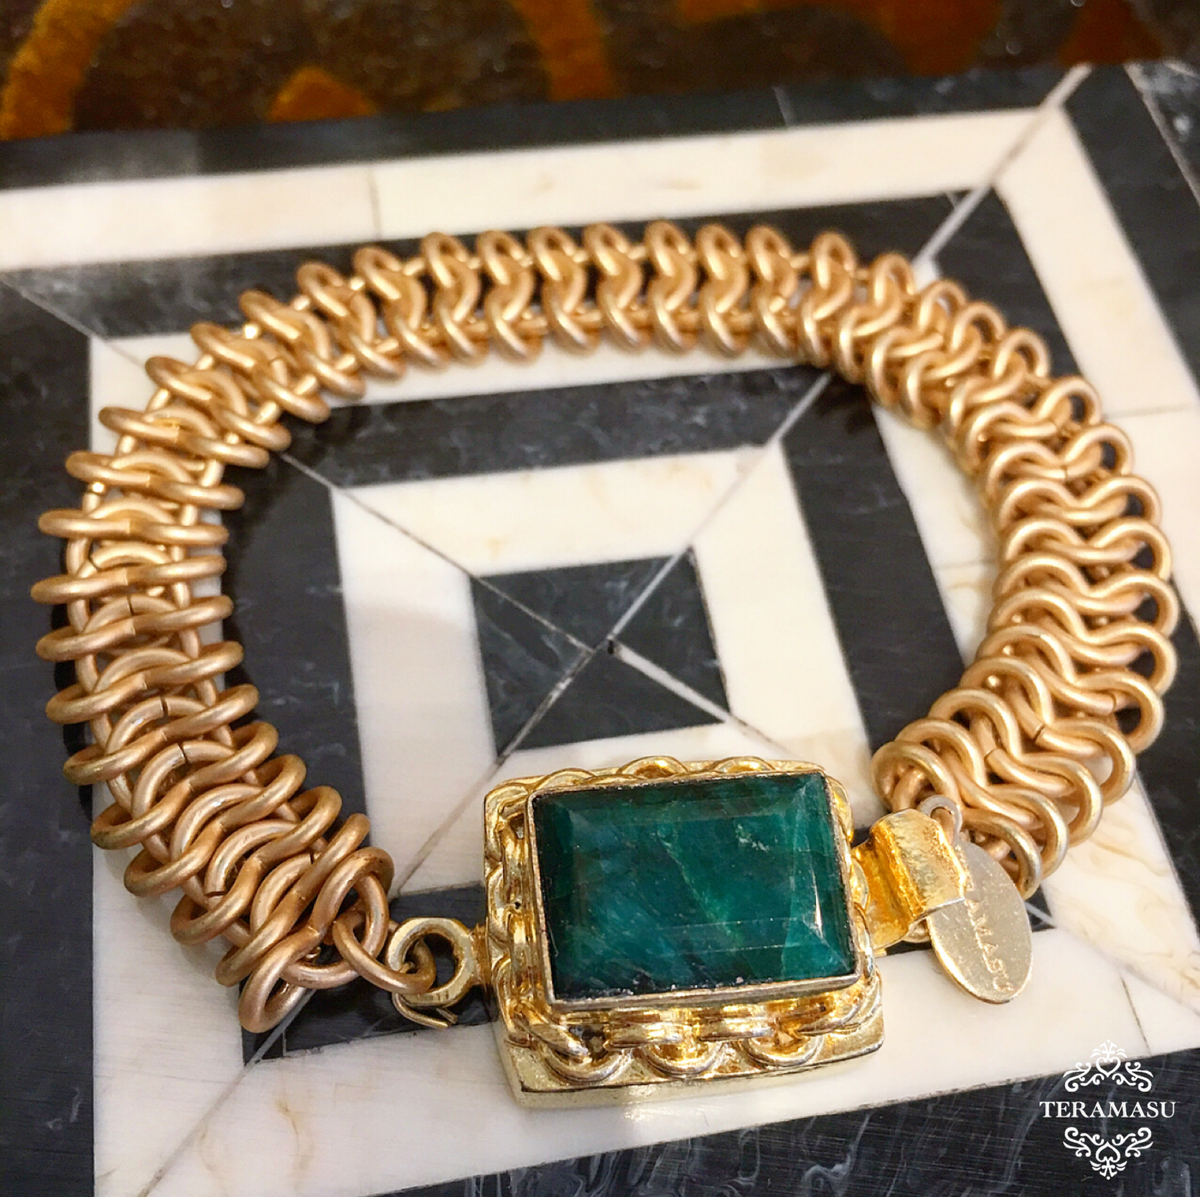 Chic Peek: Gorgeous & New, Handmade Designer Teramasu Gold Chain and One of a Kind Hunter Green Gemstone Box Clasp Bracelet